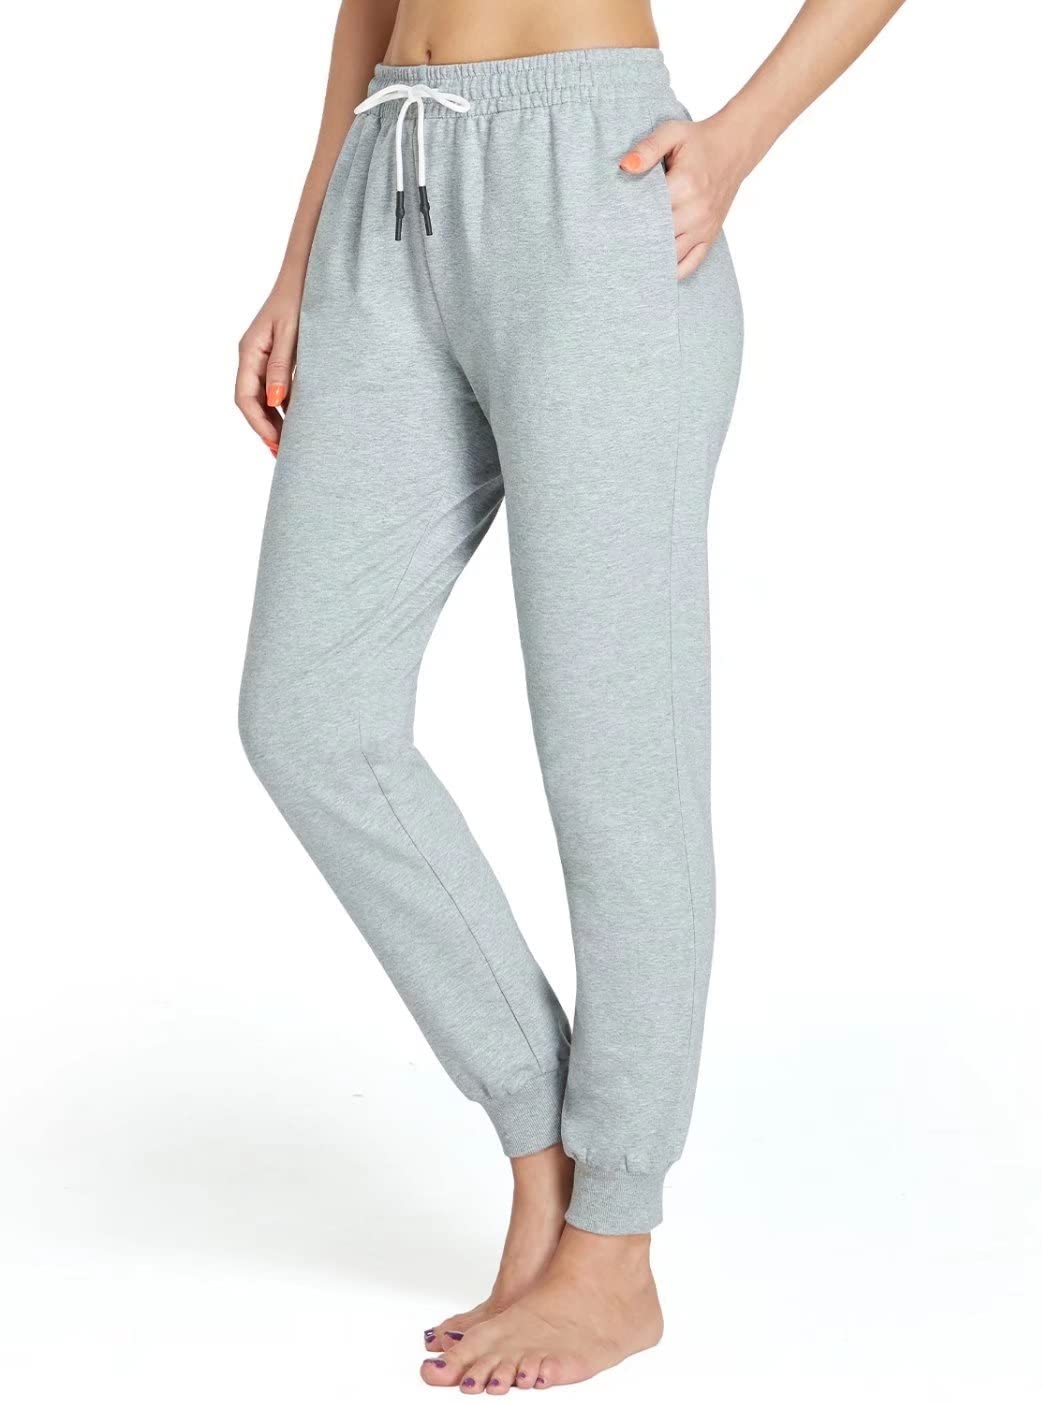 Mens Sweatpants Elastic Closed Bottoms Athletic Yoga Pants Drawstring Gym Joggers Lounge Sweats Sleep Pajamas with Pockets 